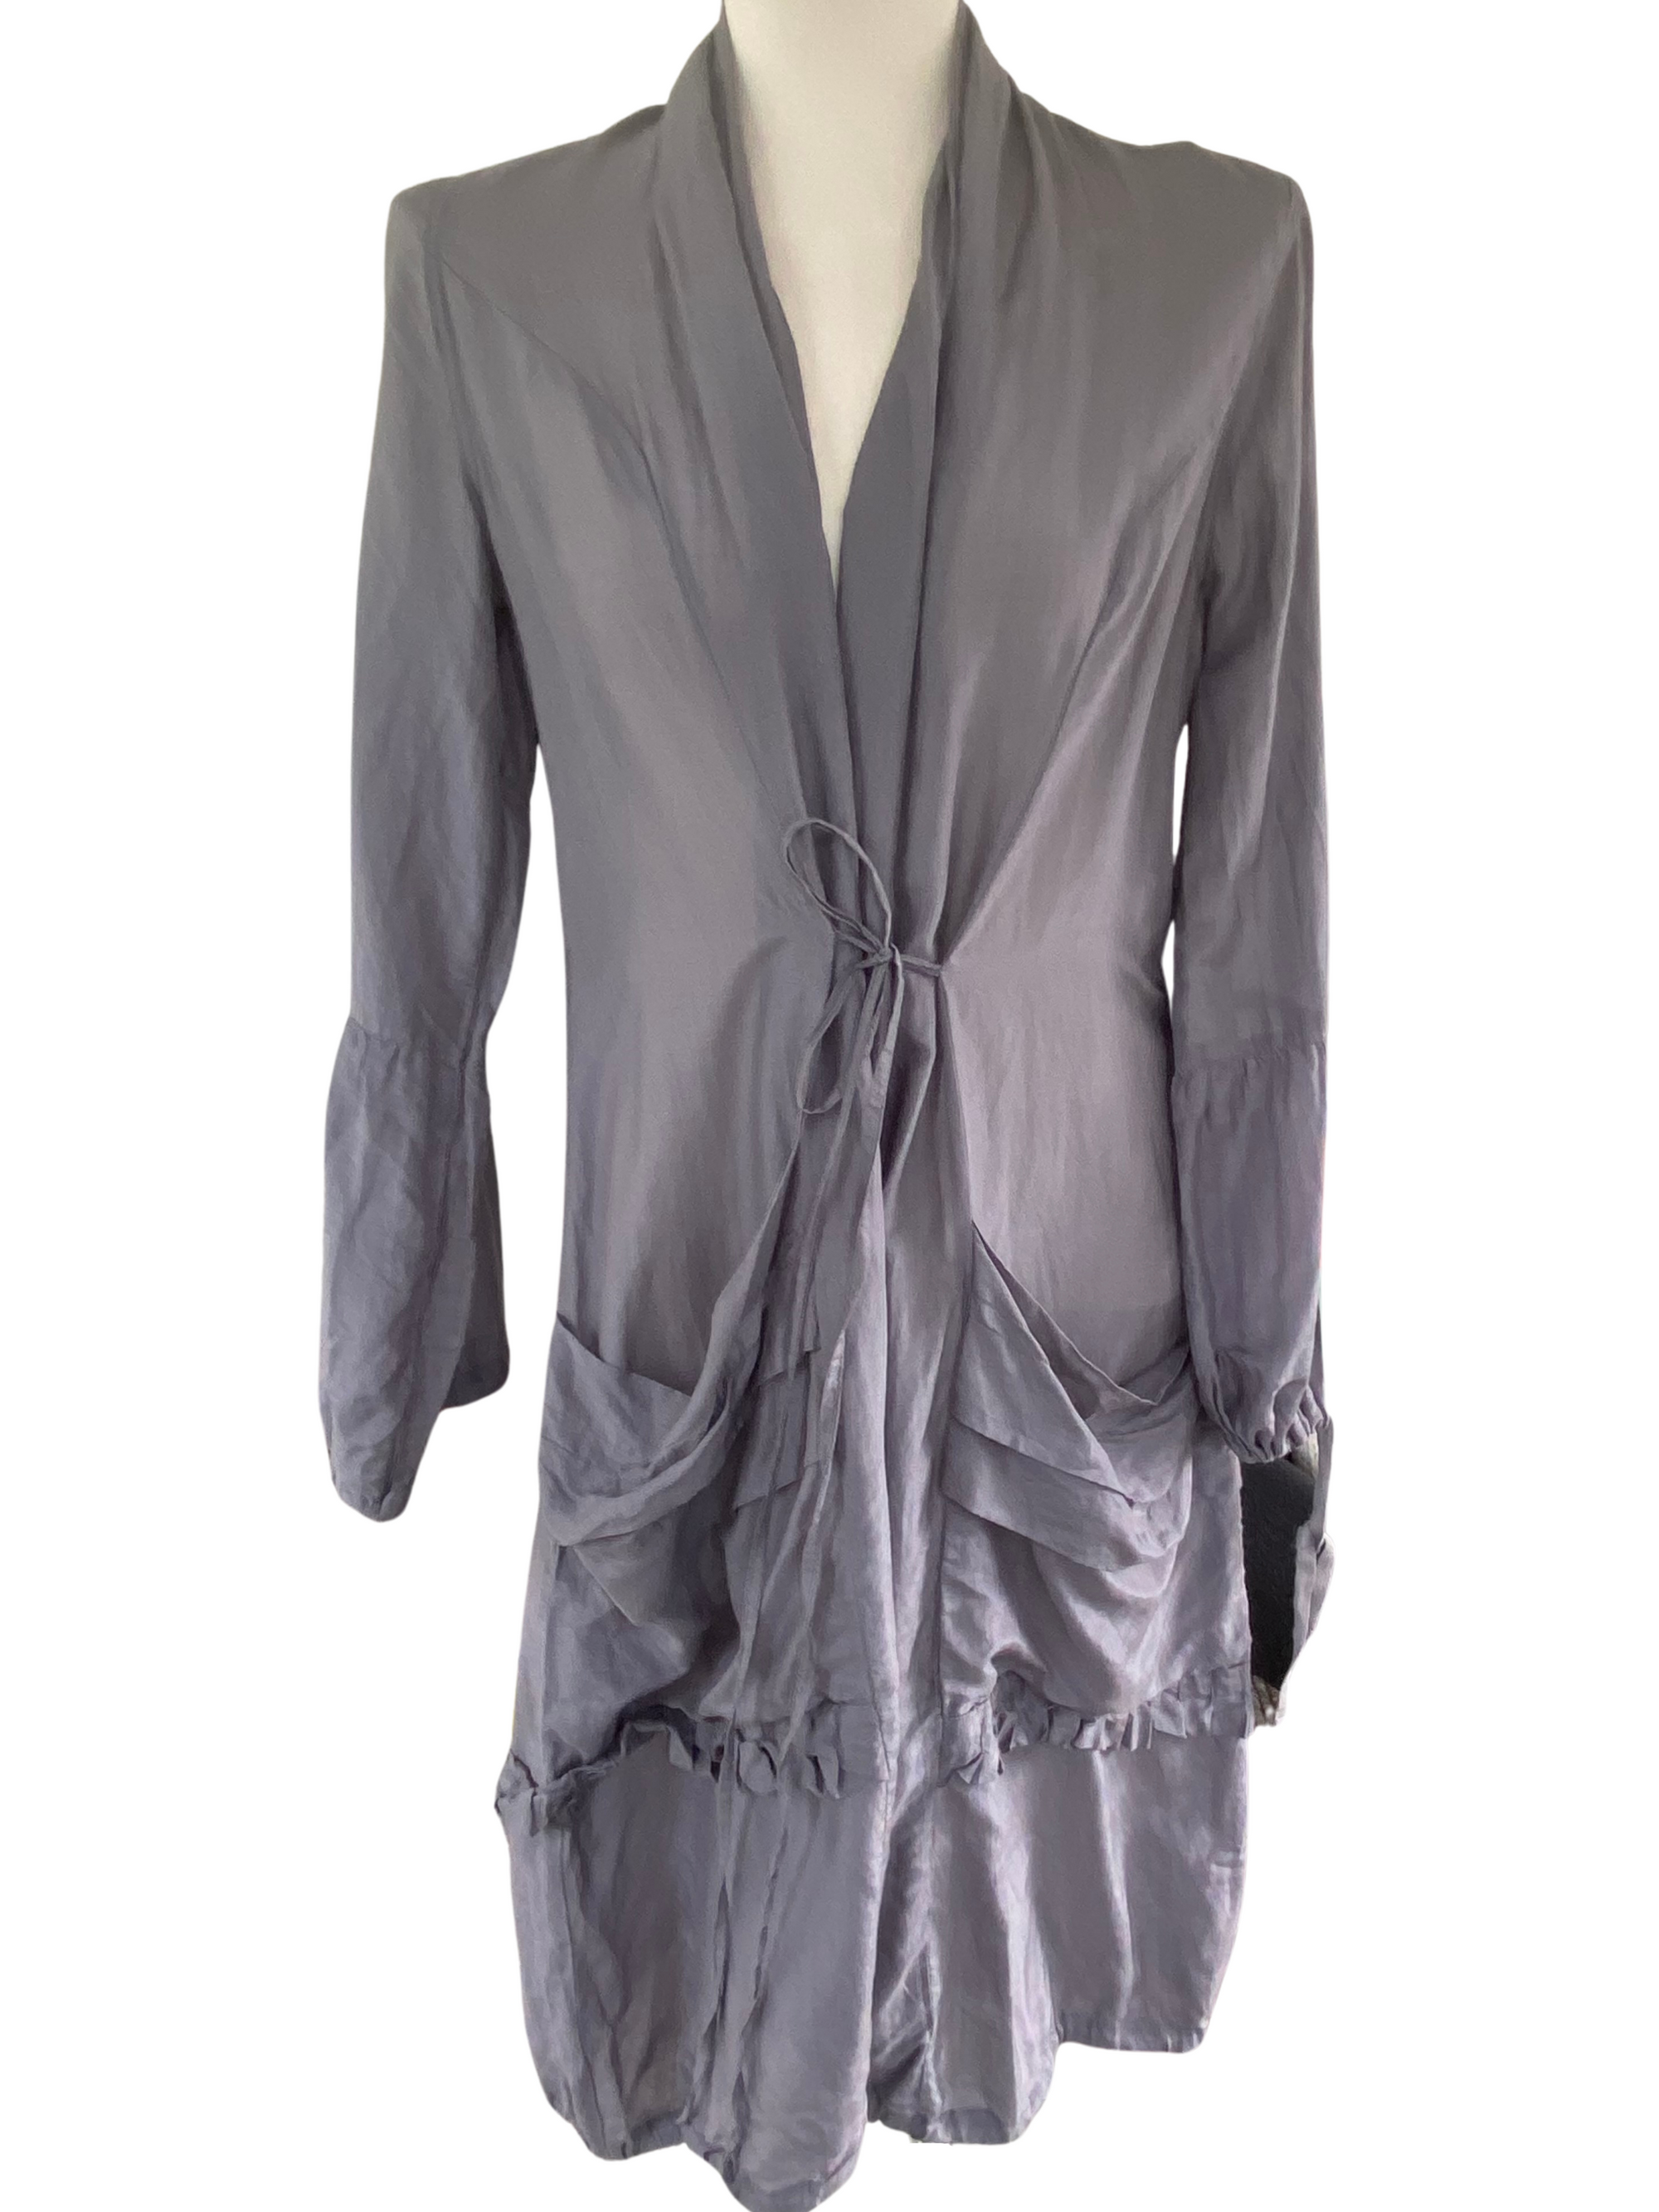 Light Summer ANIMALE of FRANCE gray silk ruffle duster jacket 